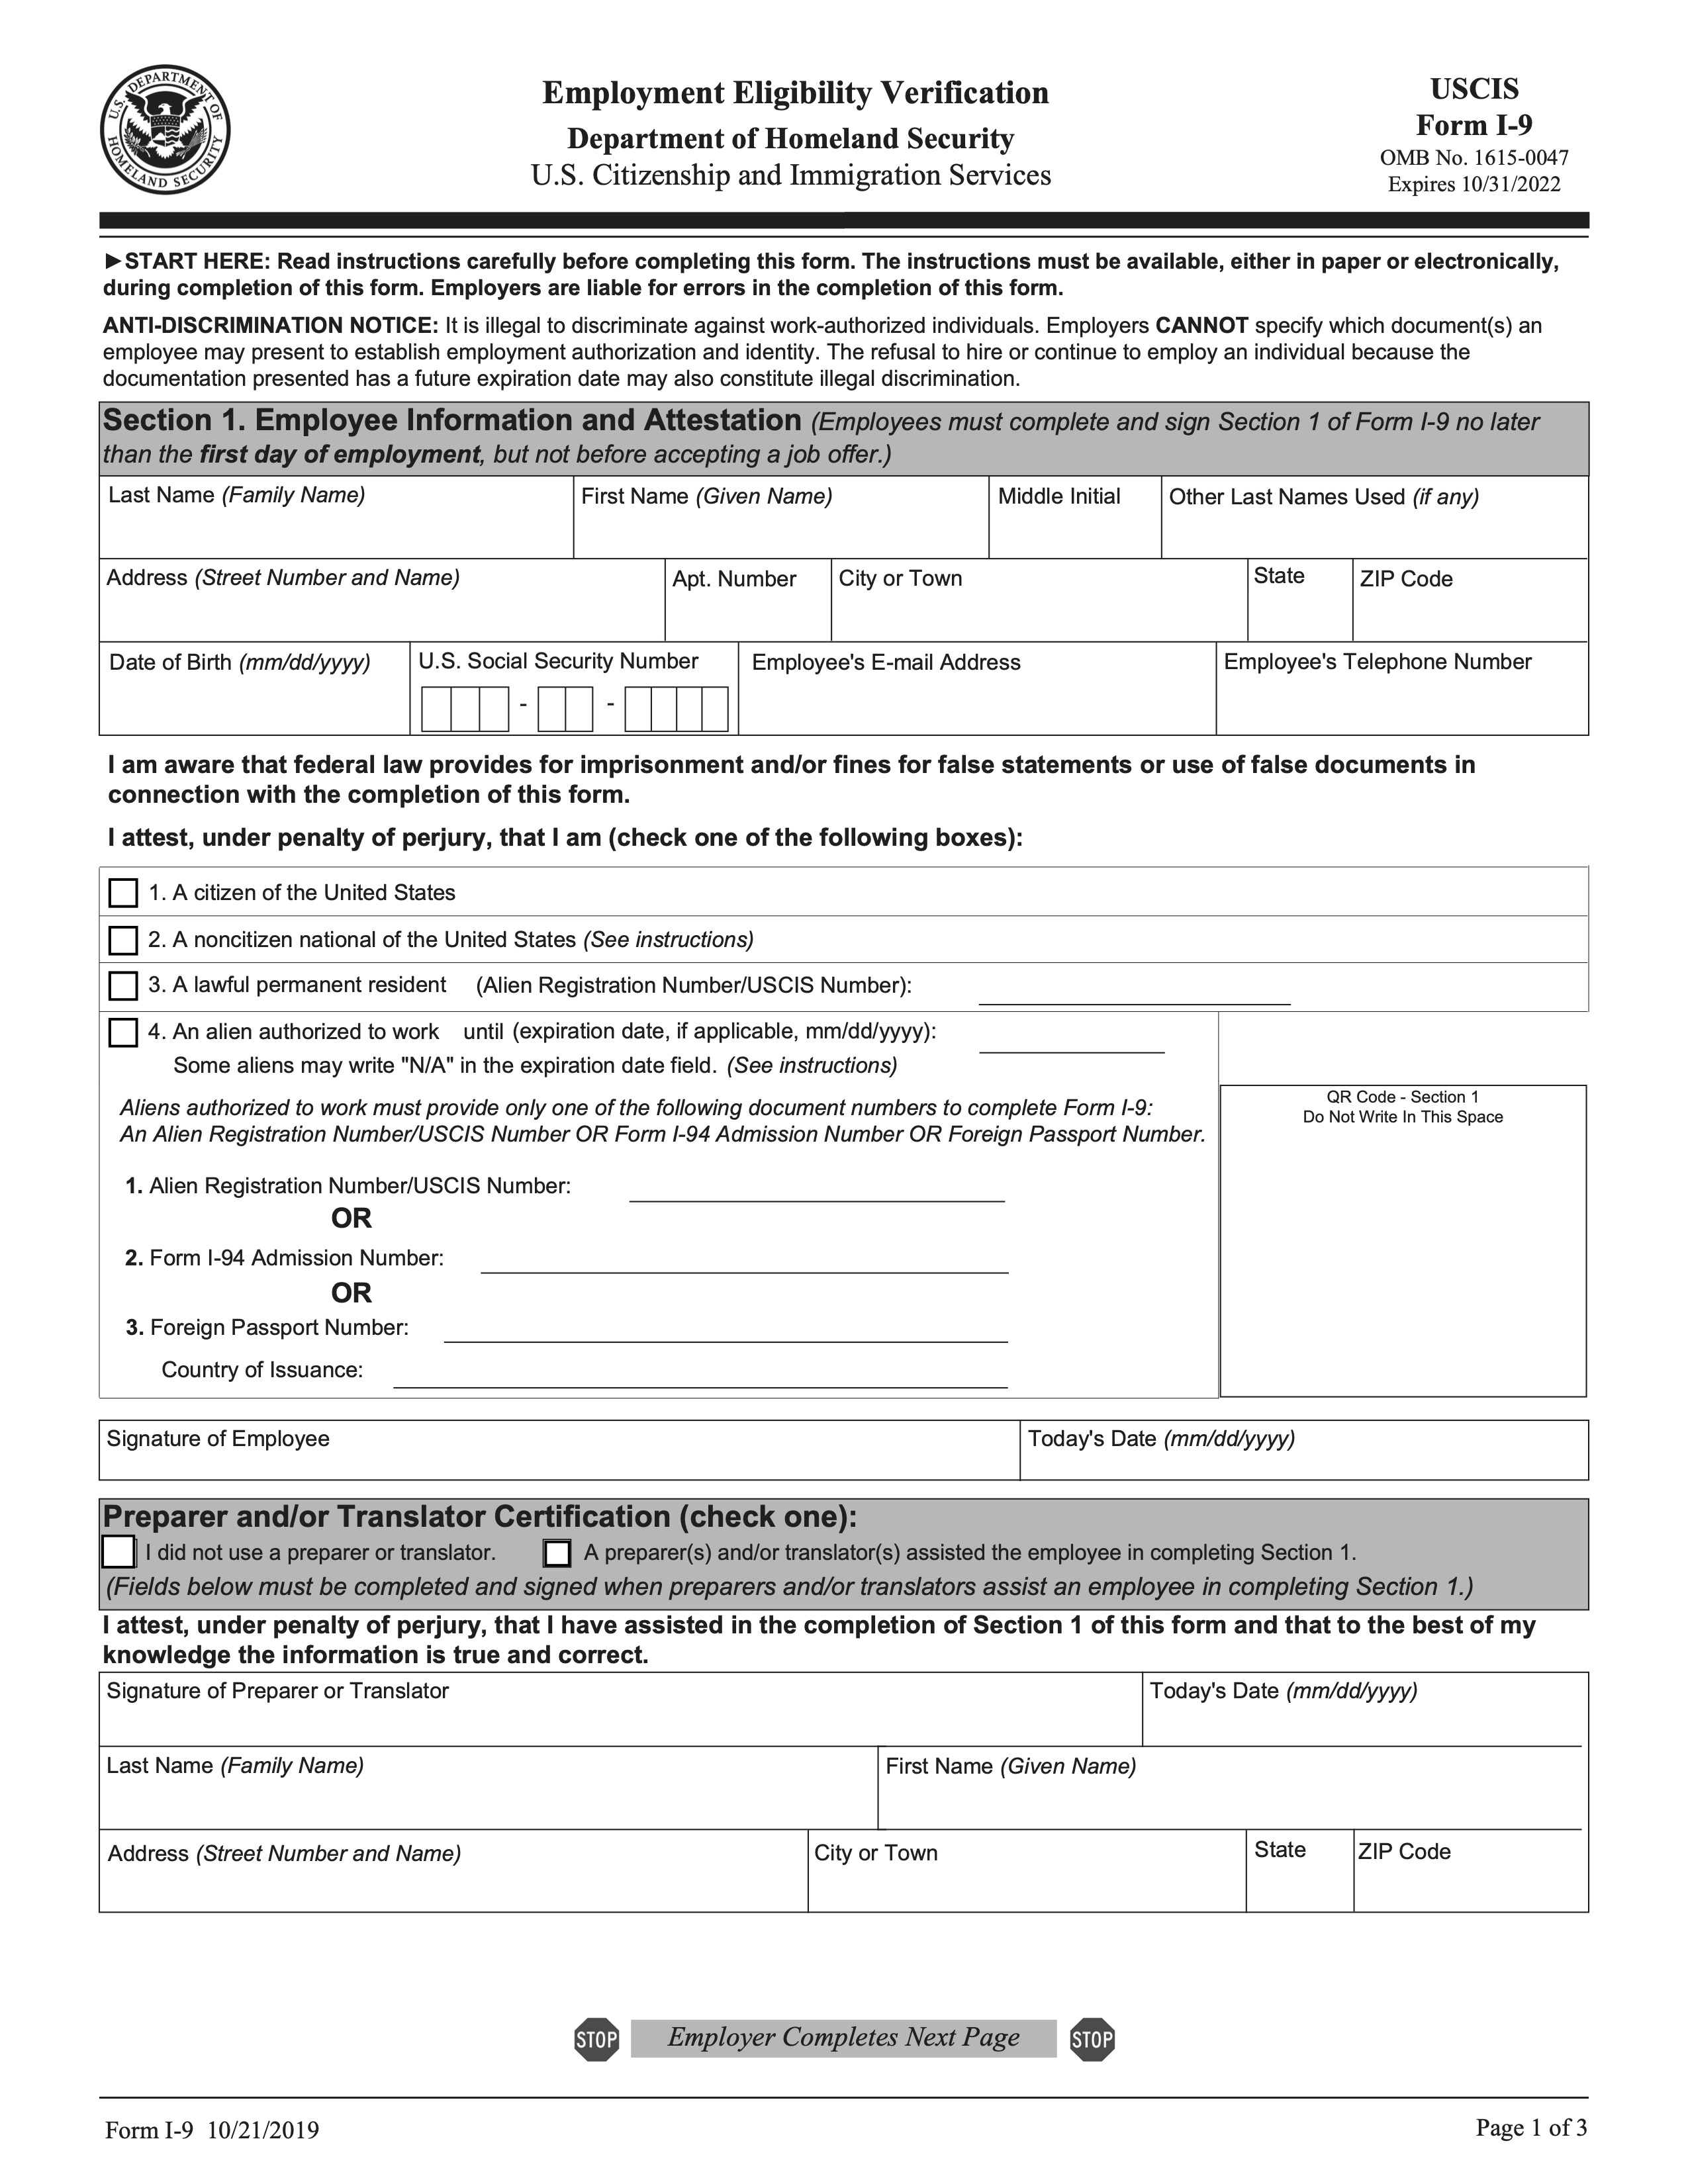 IRS I-9 Form